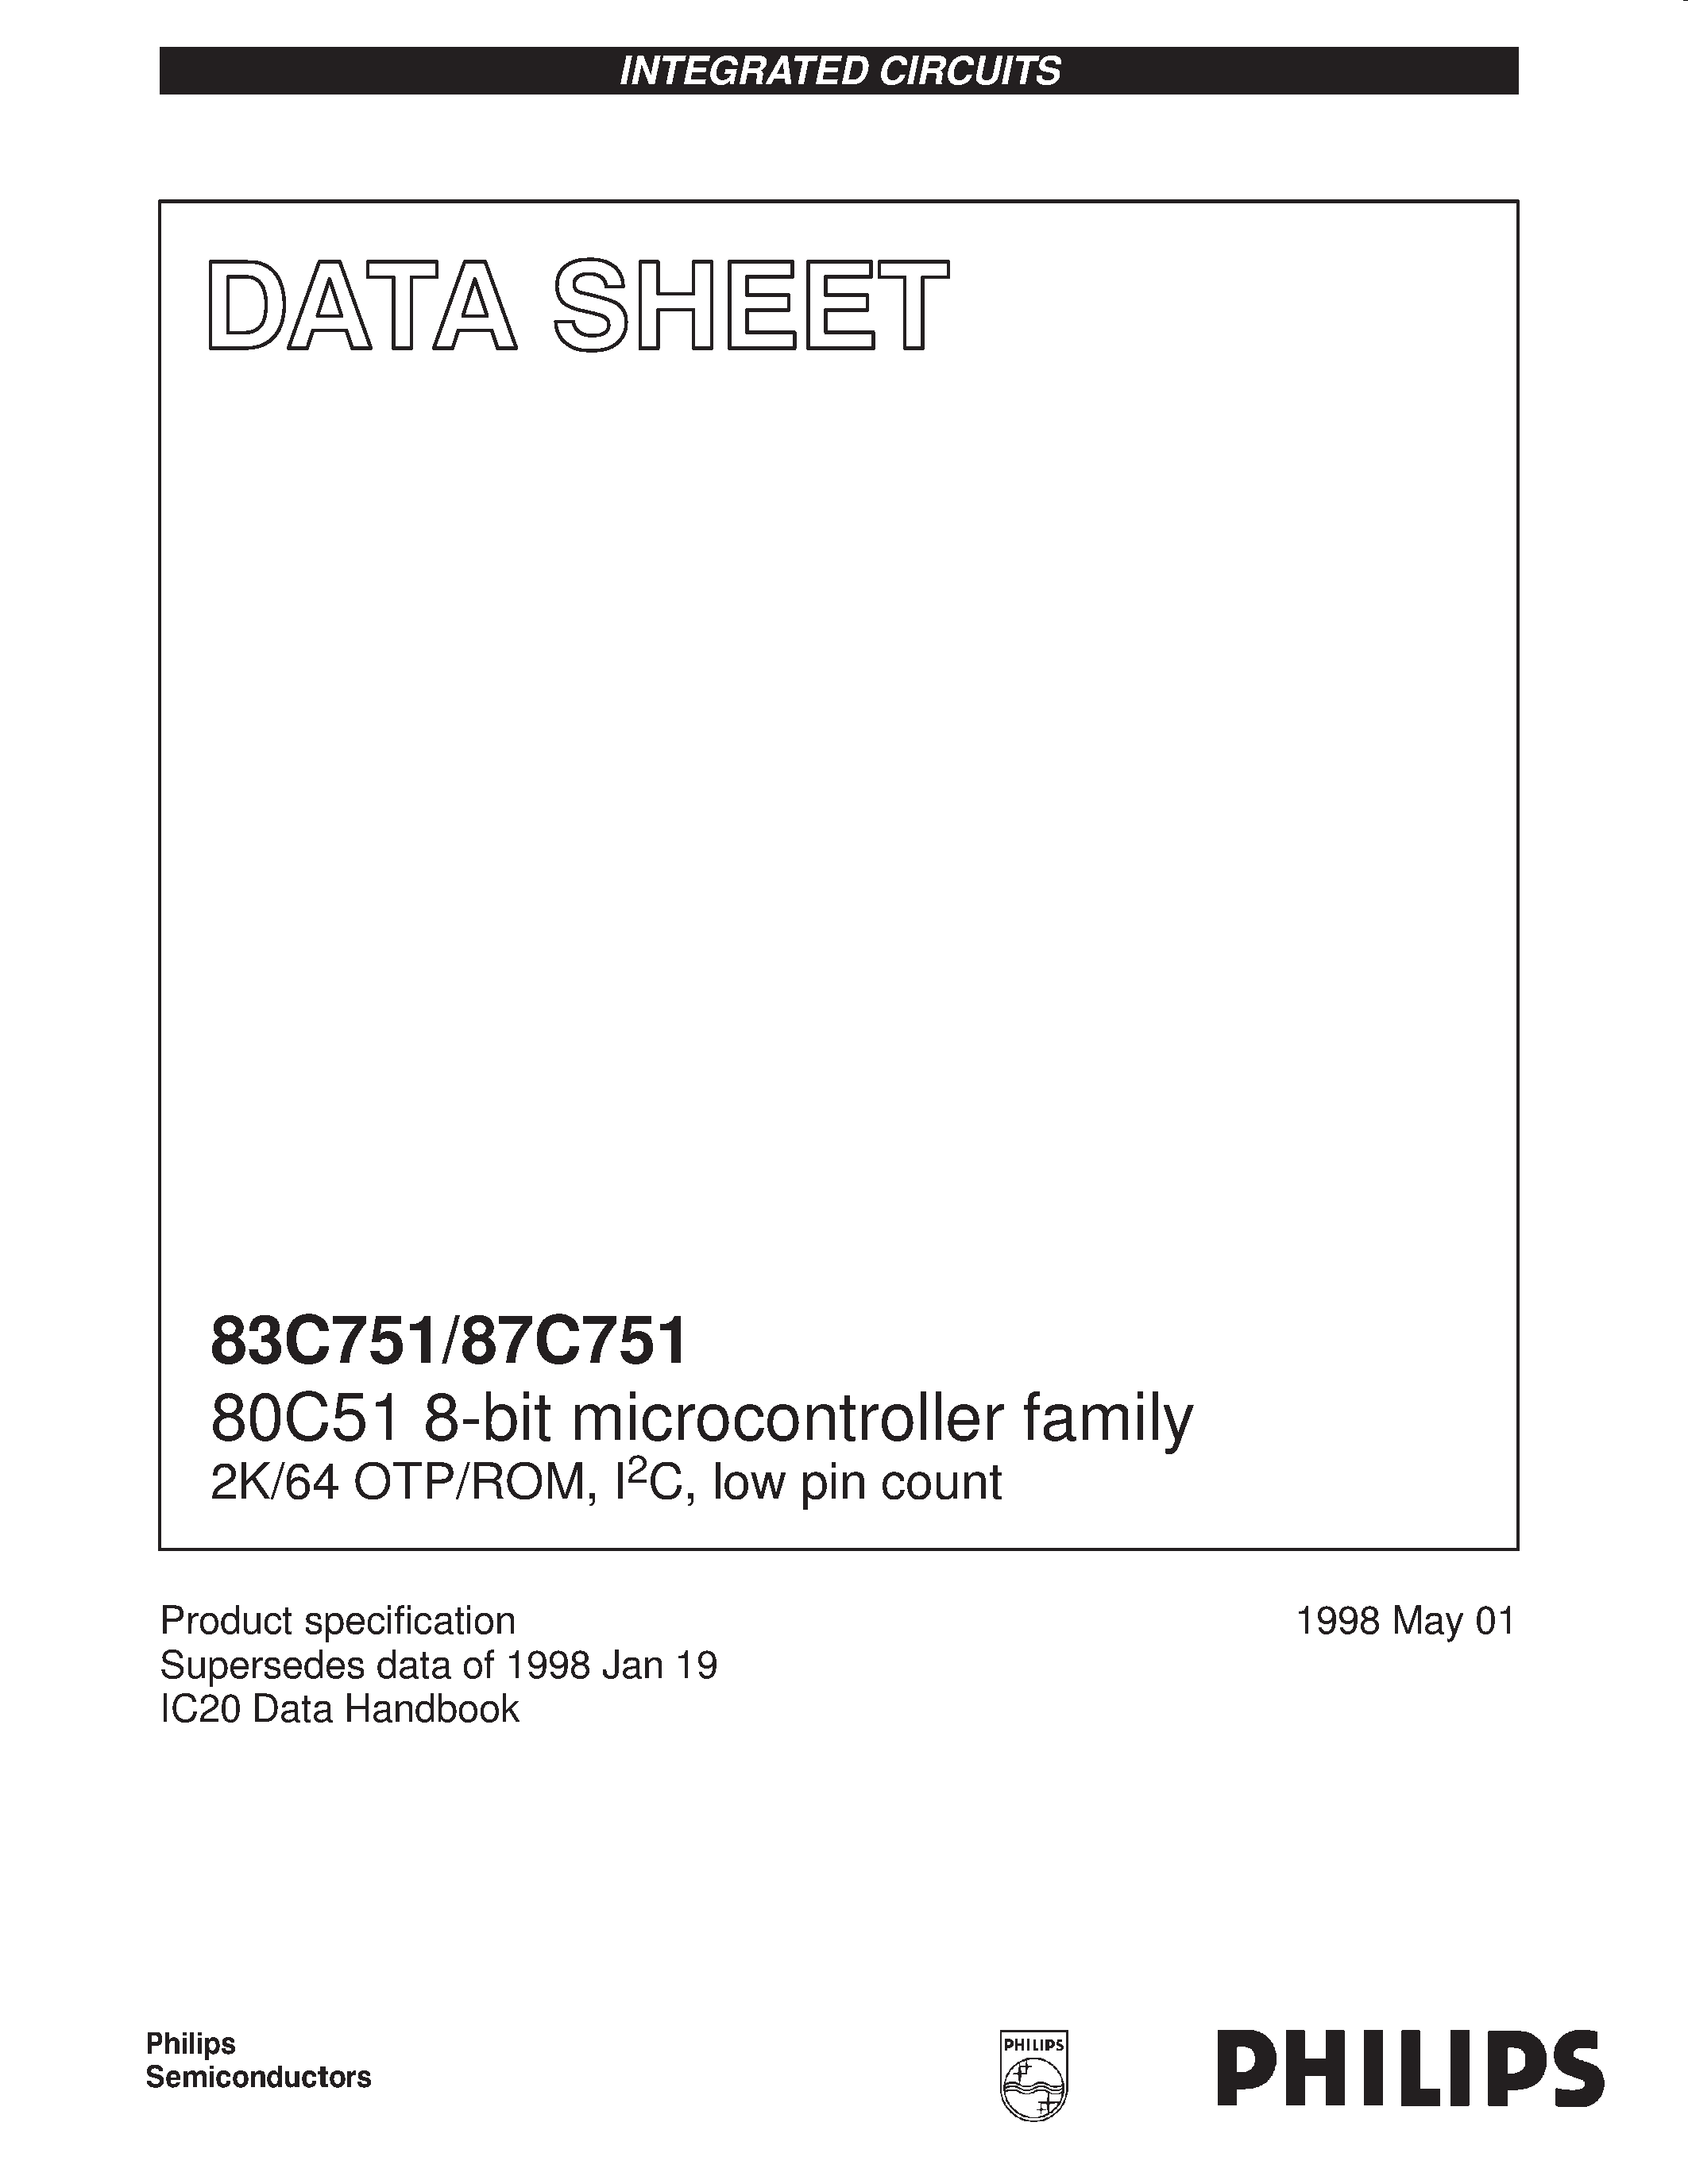 Даташит S83C751-1N24 - 80C51 8-bit microcontroller family 2K/64 OTP/ROM / I2C / low pin count страница 1